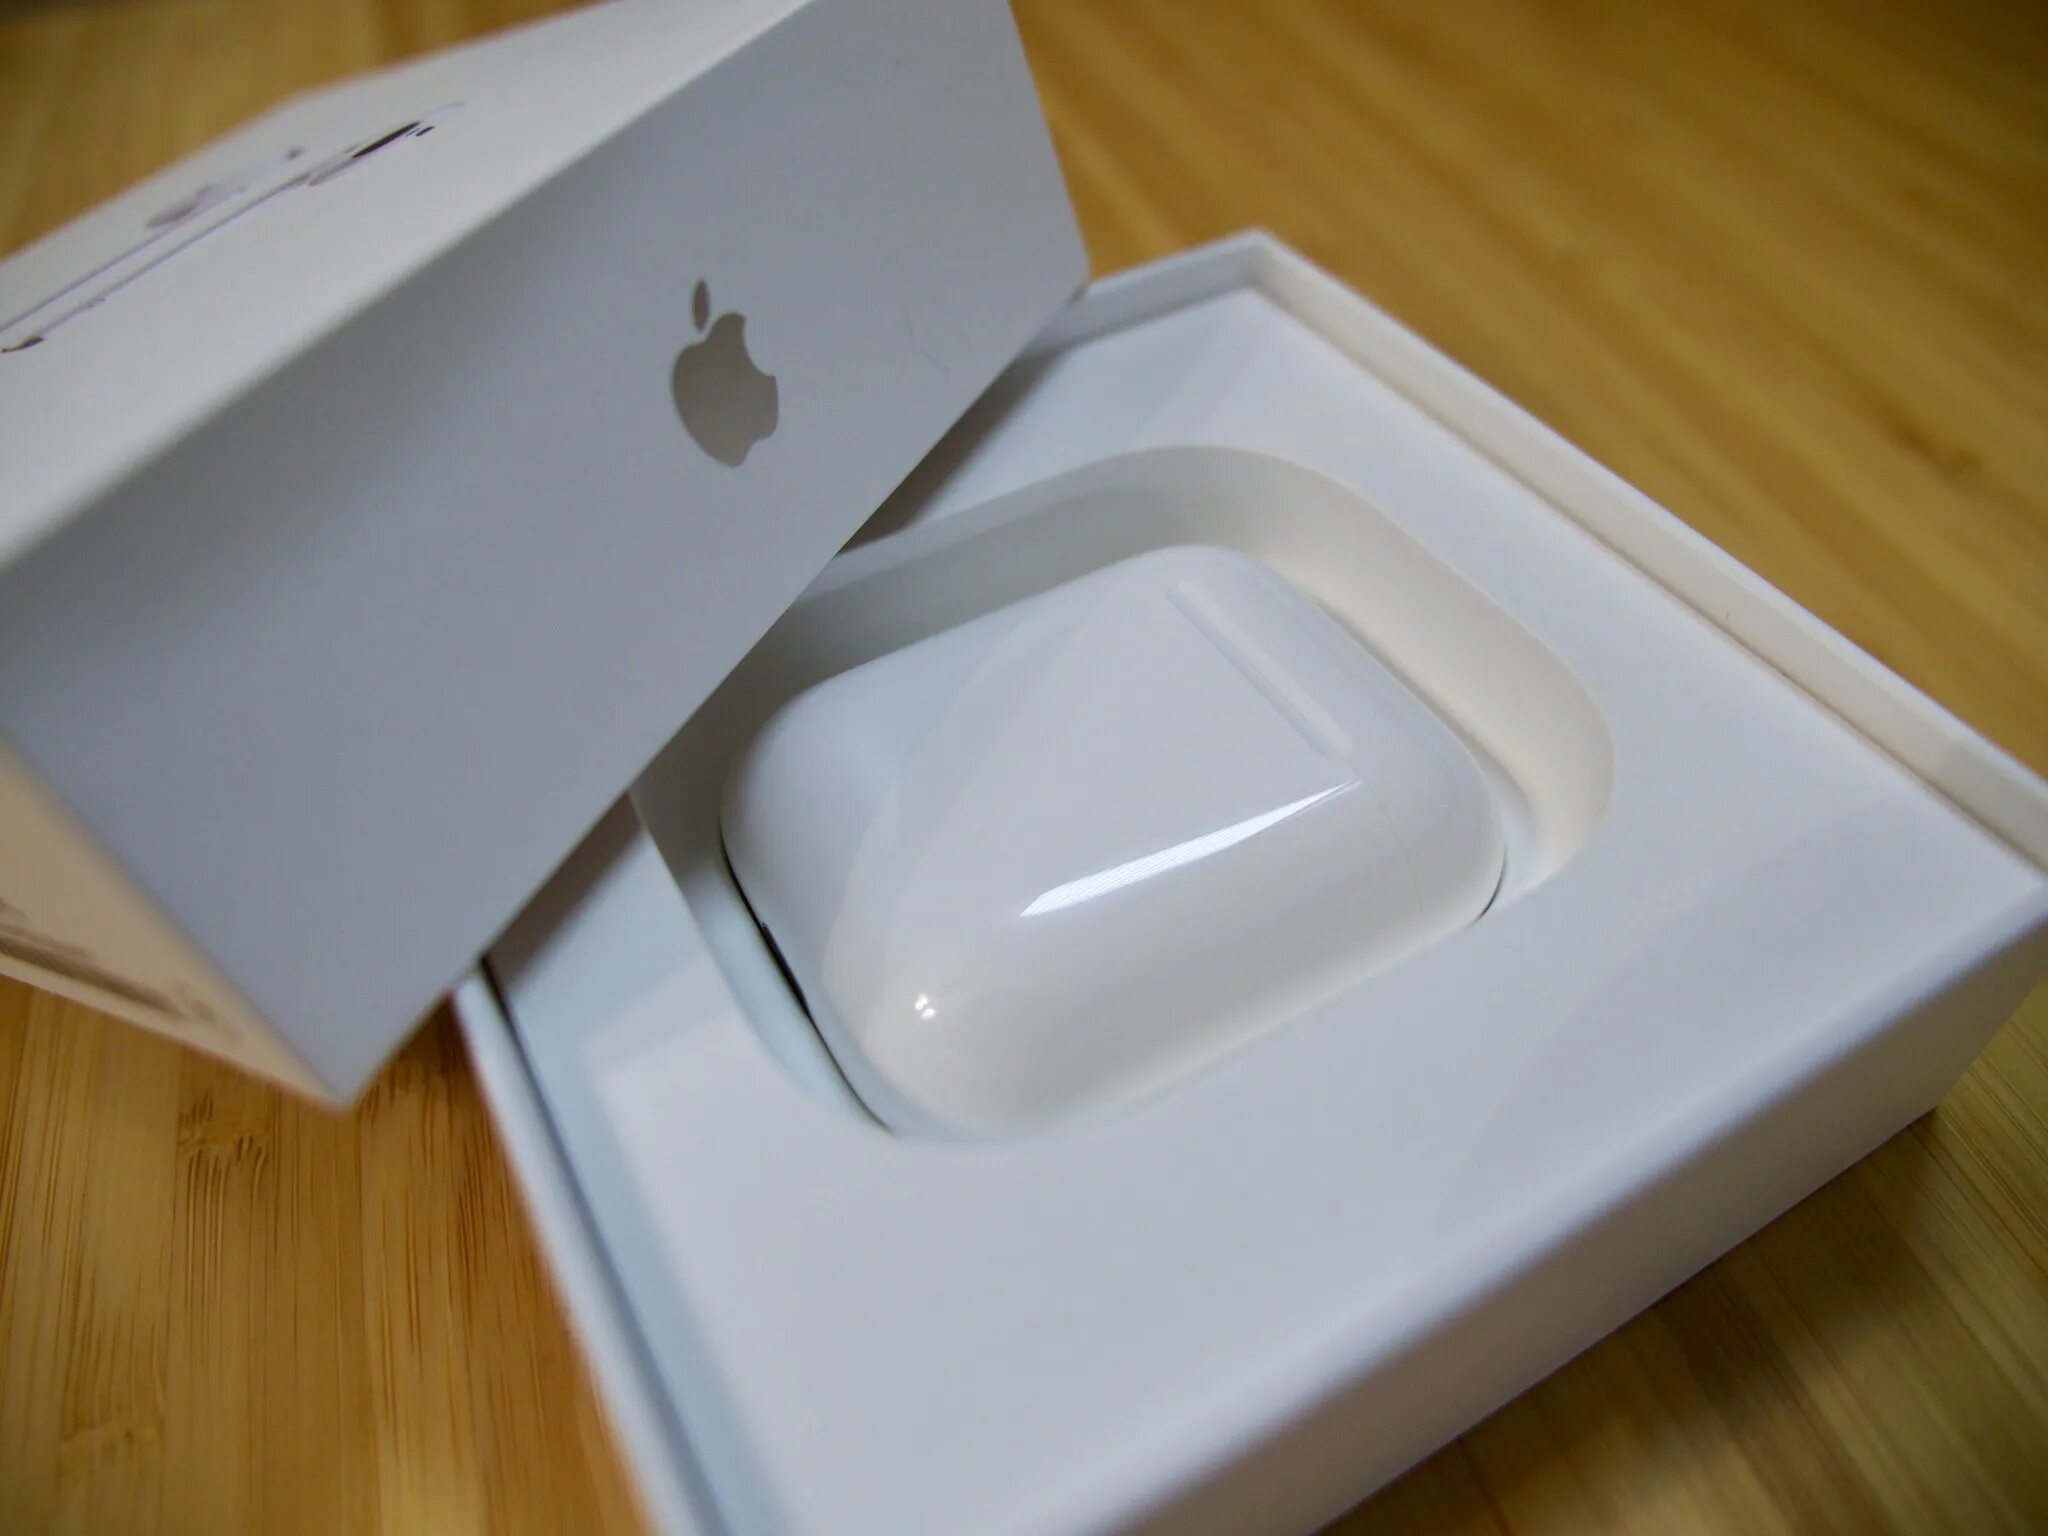 Apple AIRPODS 2 коробка. Apple AIRPODS Pro 2 коробка. Аирподсы эпл. Apple аирподс коробка. Продать airpods